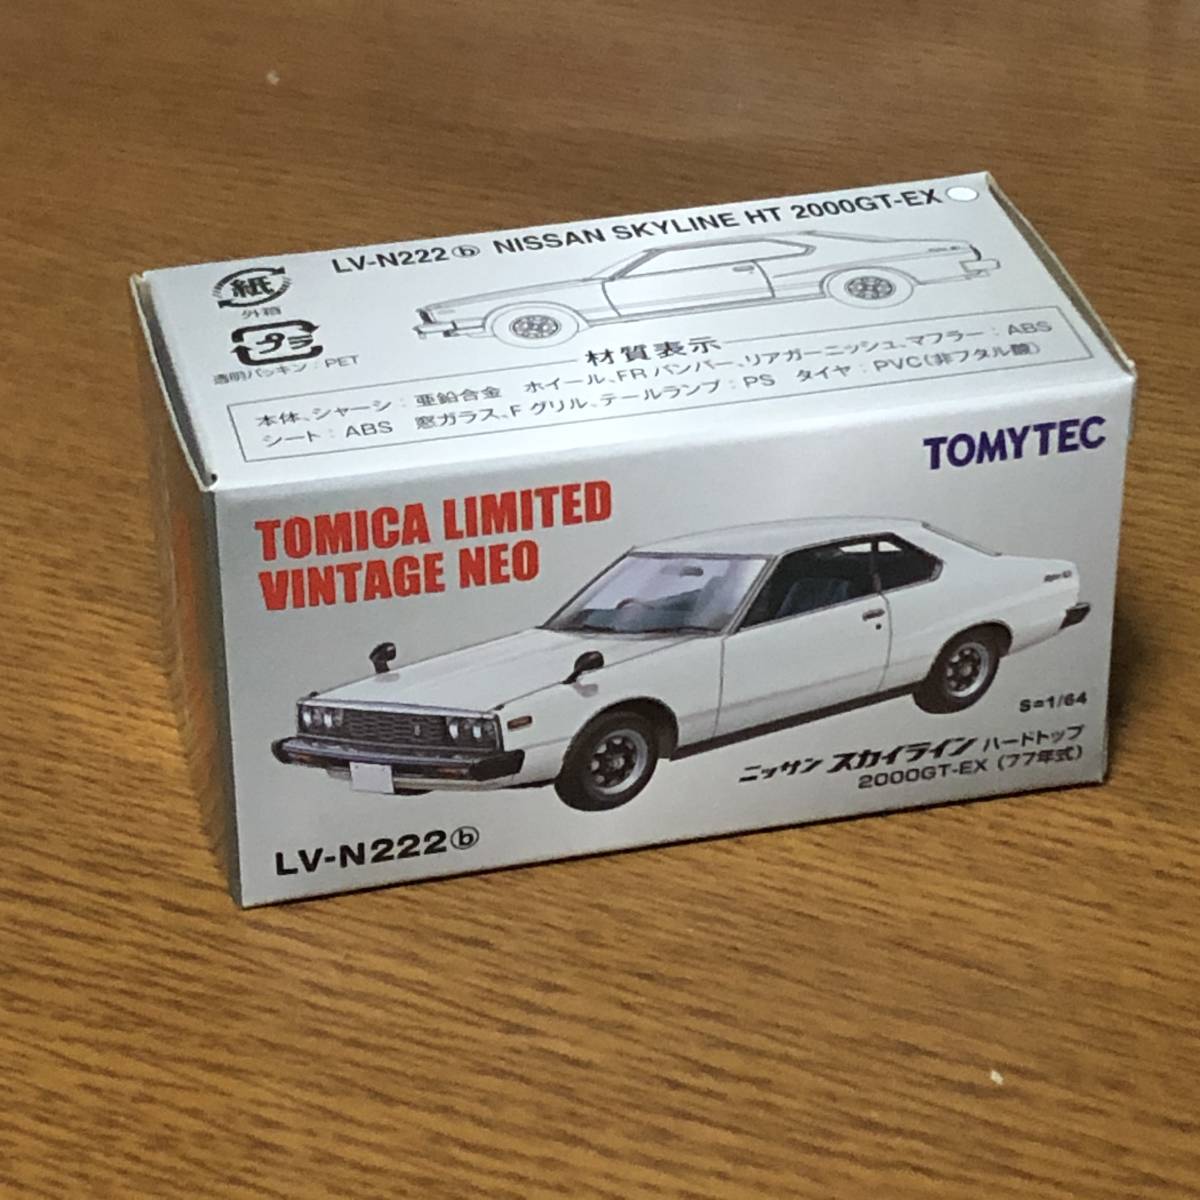 !! Tomica Limited Vintage Neo LV-N222b Nissan Skyline 2000GT-EX(77 year ) white!!